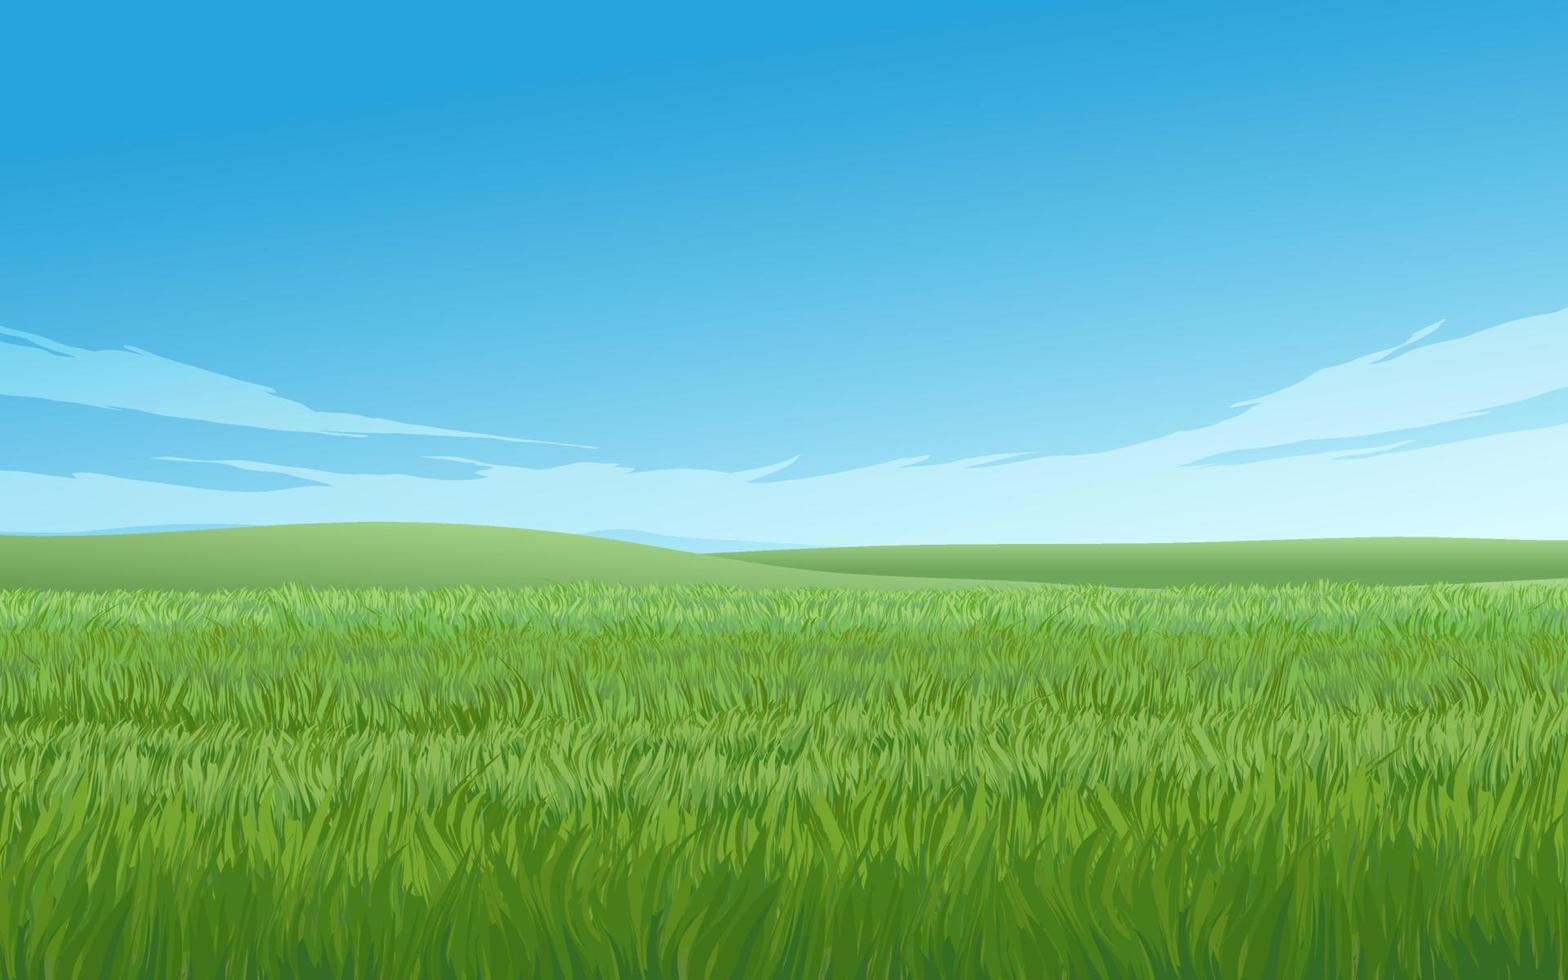 Grassland landscape illustration on sunny day vector